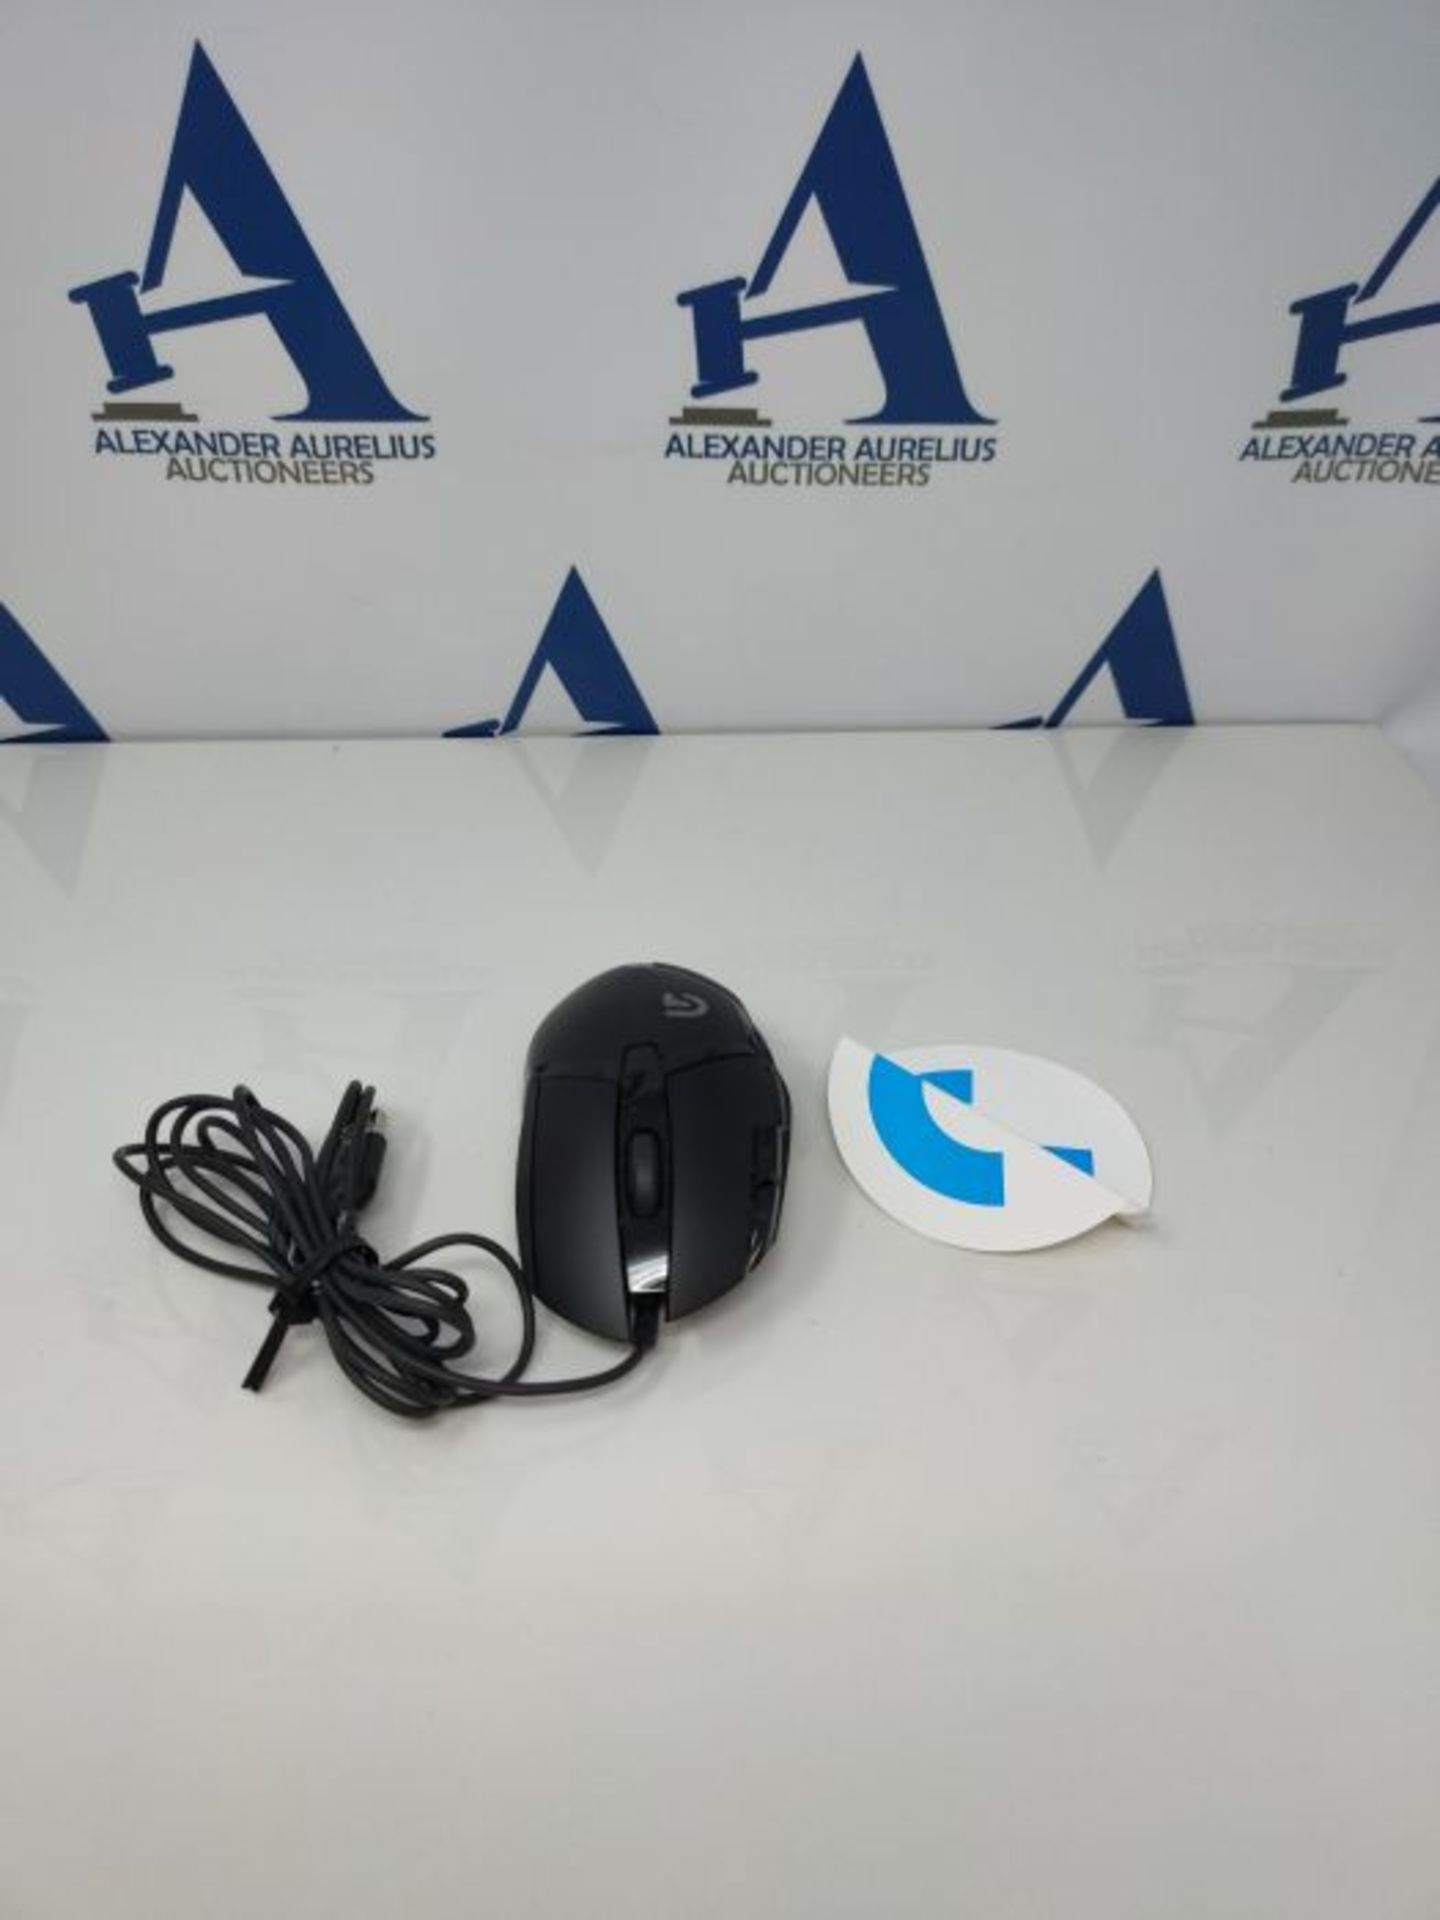 Logitech G502 HERO High Performance Wired Gaming Mouse, HERO 25K Sensor, 25,600 DPI, R - Image 3 of 3